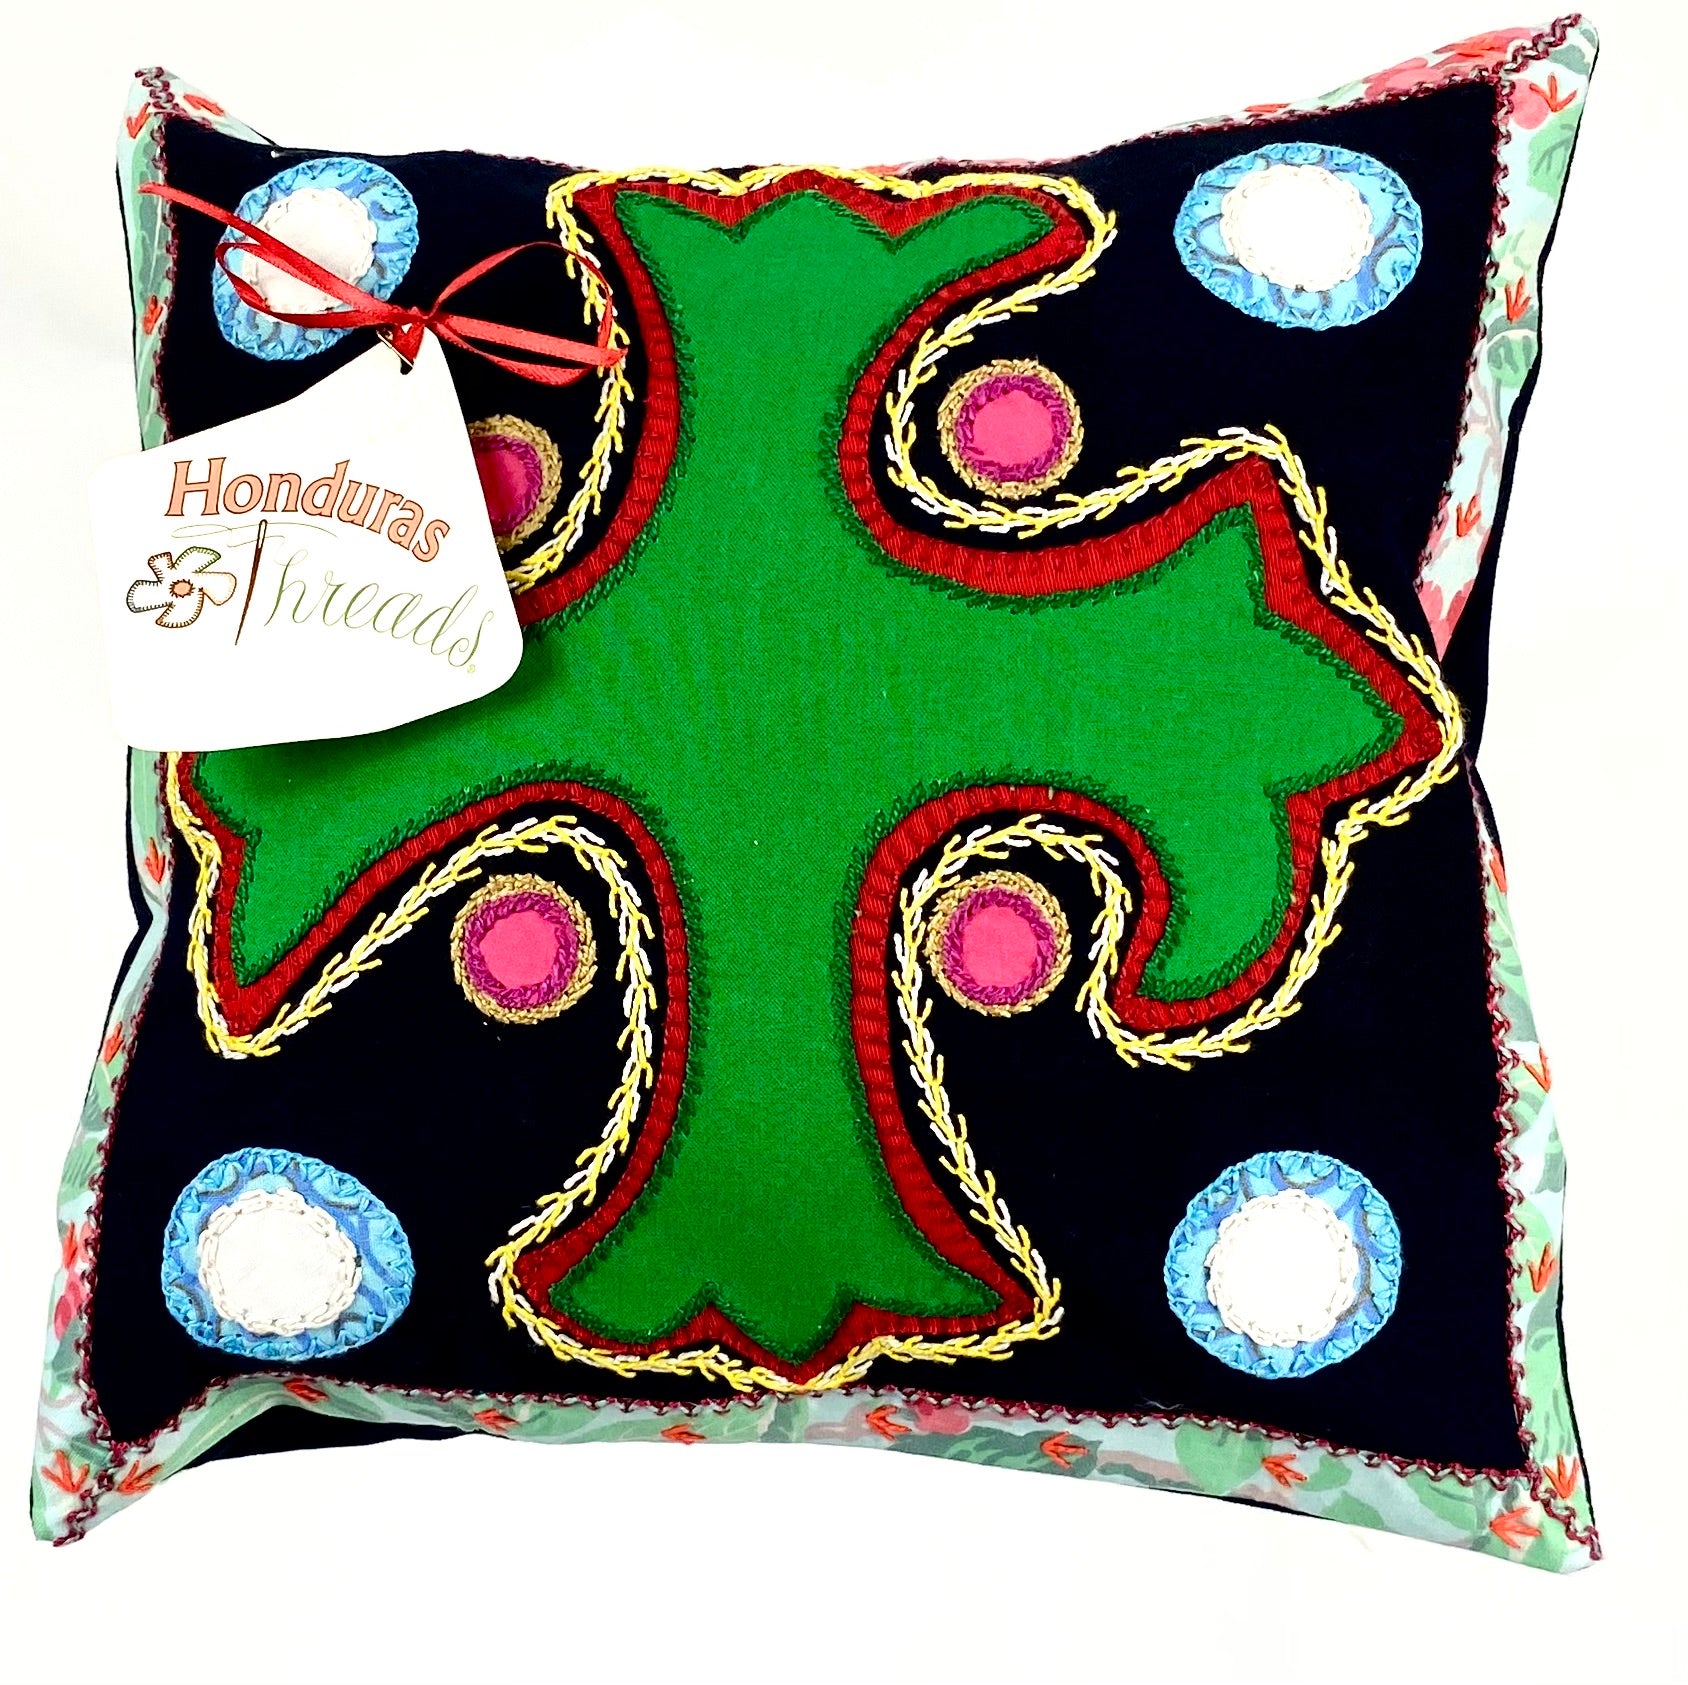 Cruz Dominicana Design Embroidered Pillow on black Honduras Threads